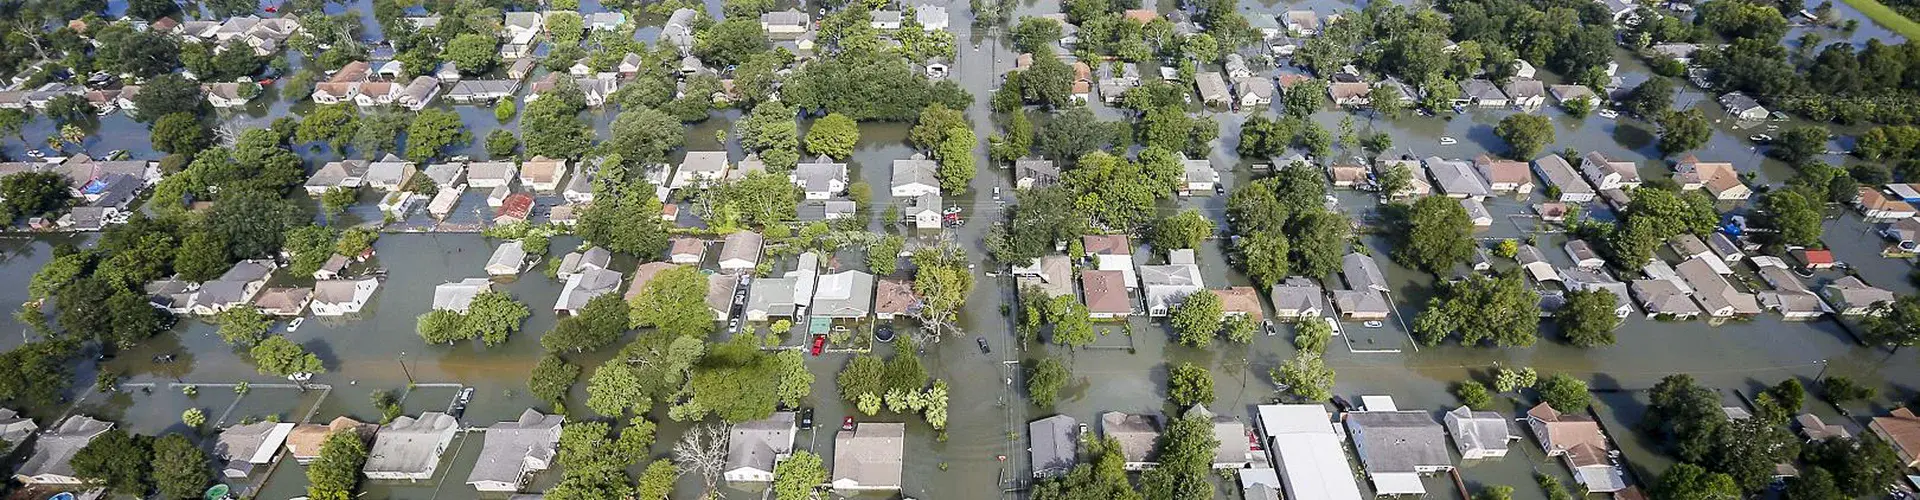 Harvey flooding, southeast Texas (Credit: Air National Guard photo by Staff Sgt. Daniel J. Martinez)